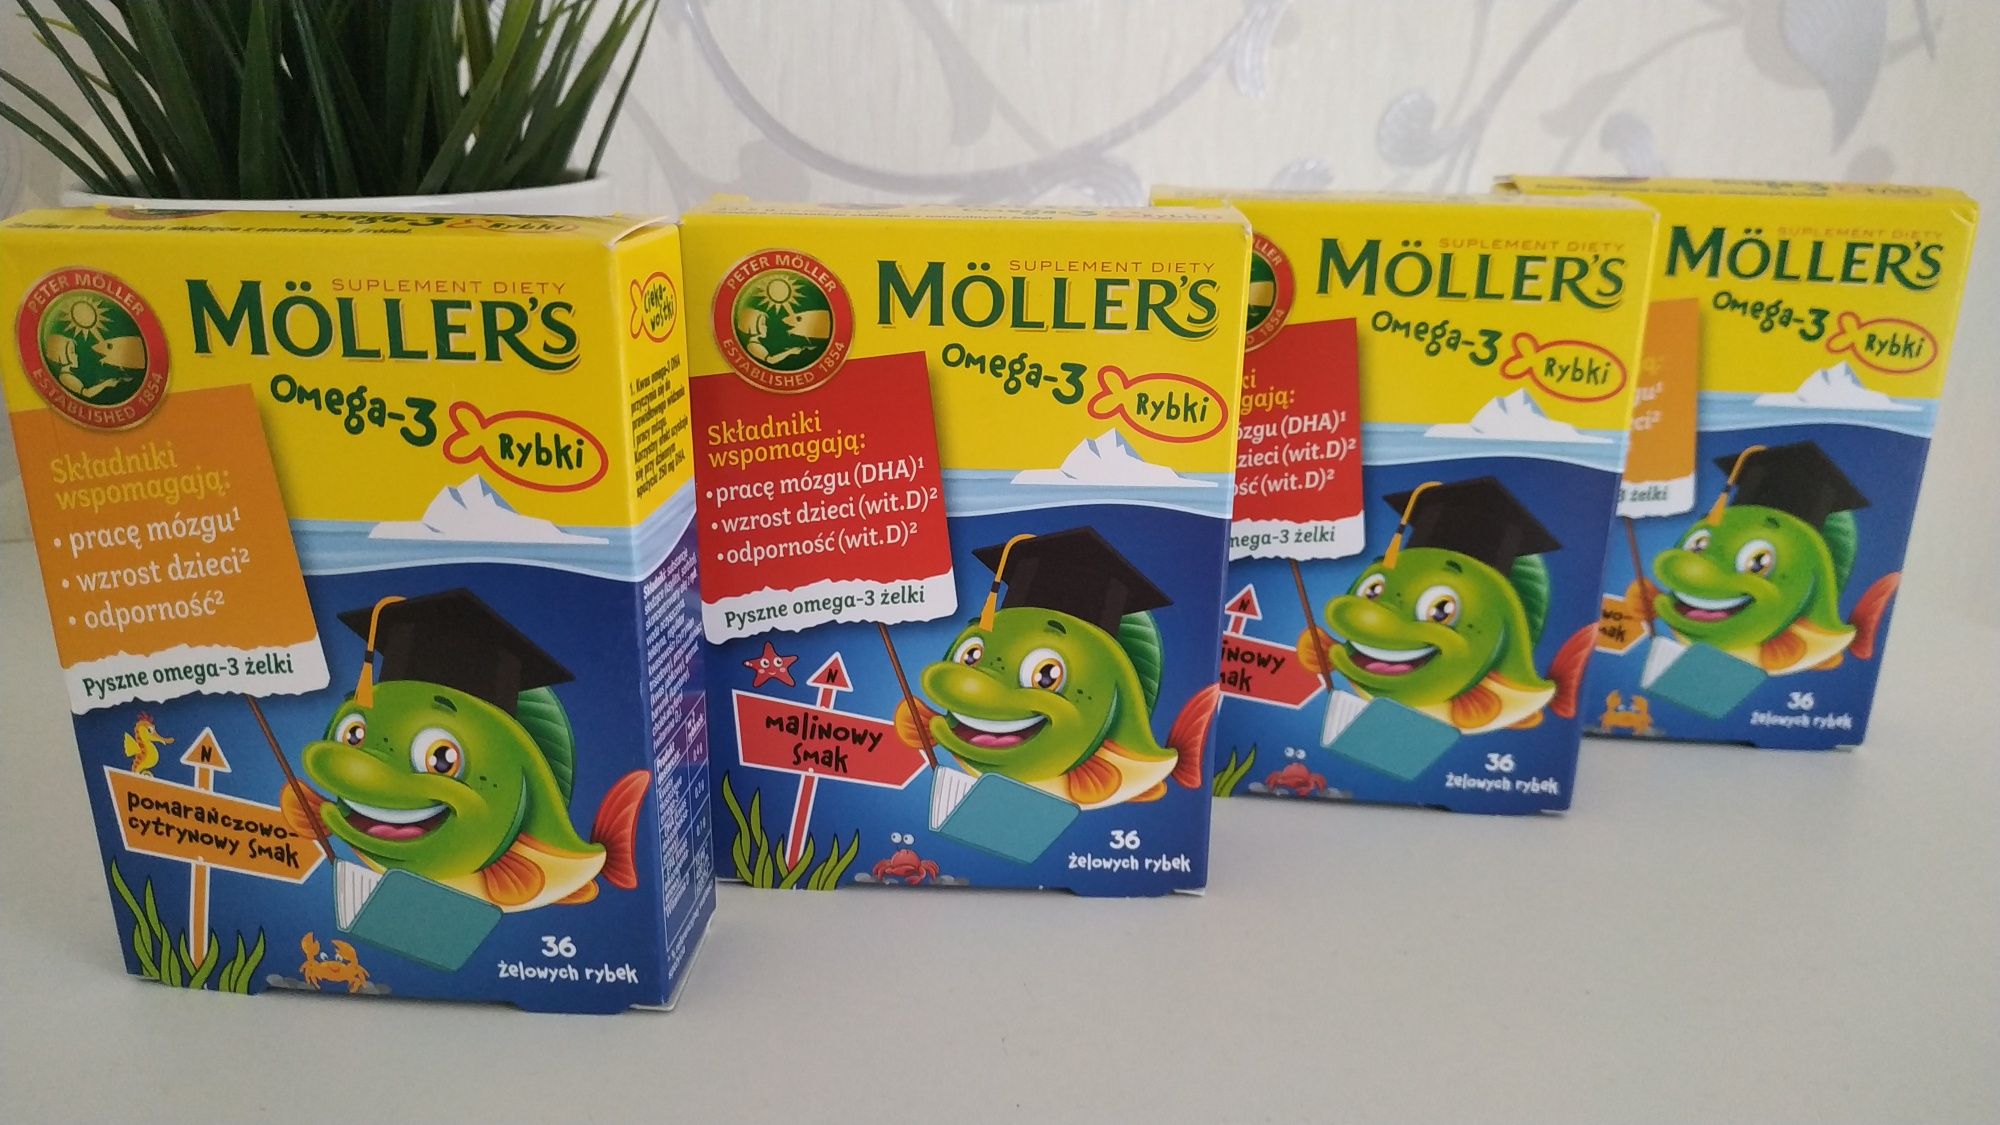 Moller's Omega-3 з Норвегії